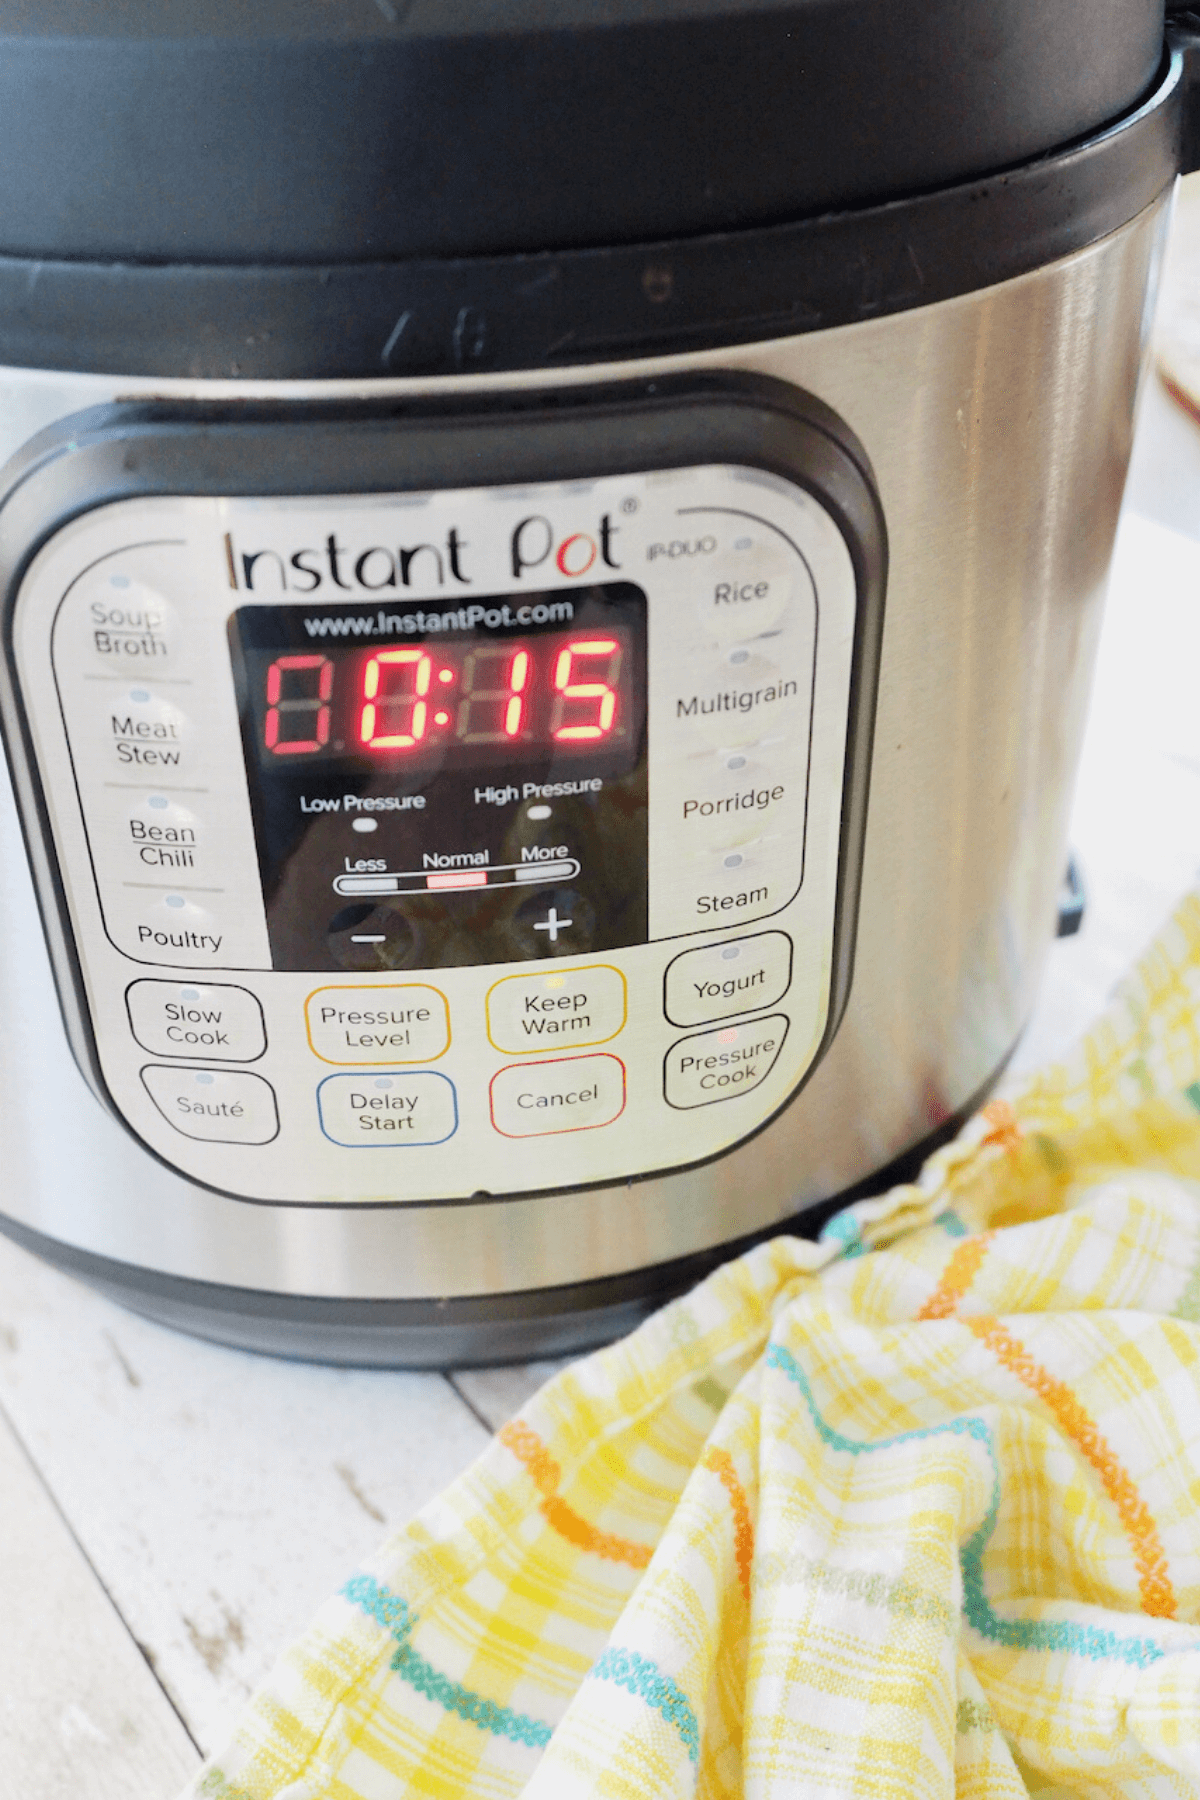 Timer set to 15 minutes pressure cook on Instant Pot. 